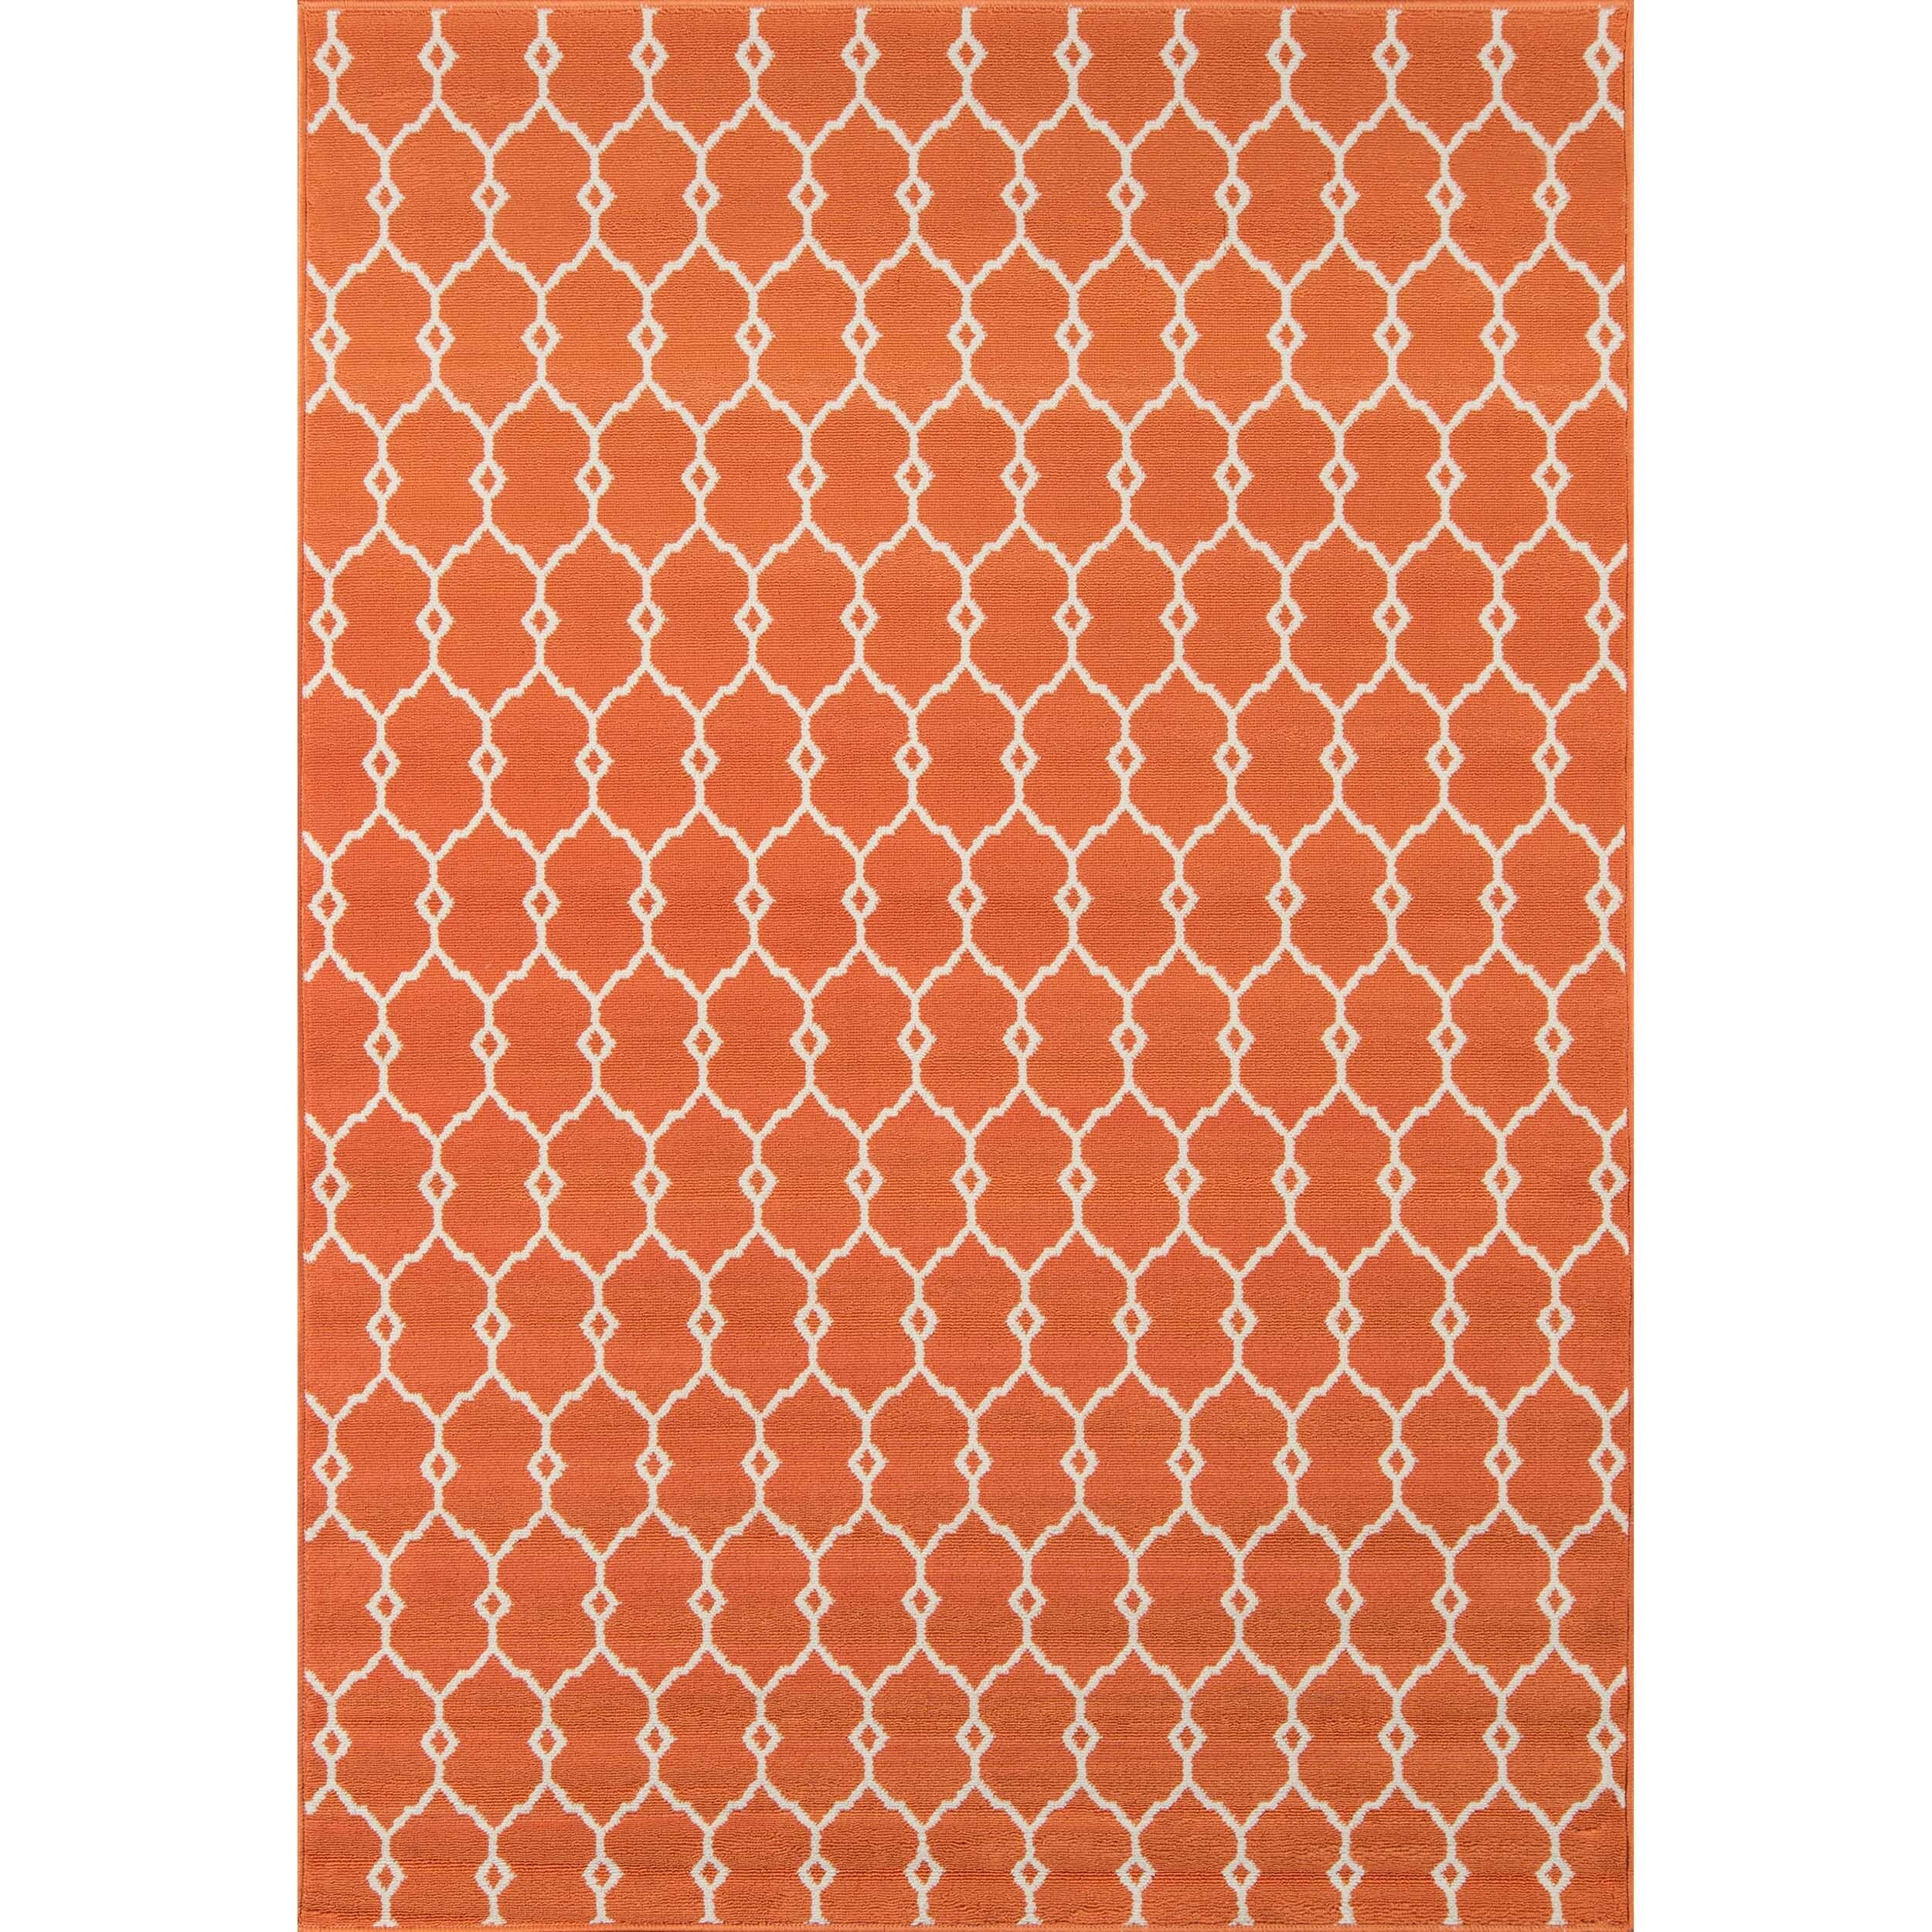 Momeni Baja Trellis Orange Indoor/Outdoor Area Rug (6'7 x 9'6)